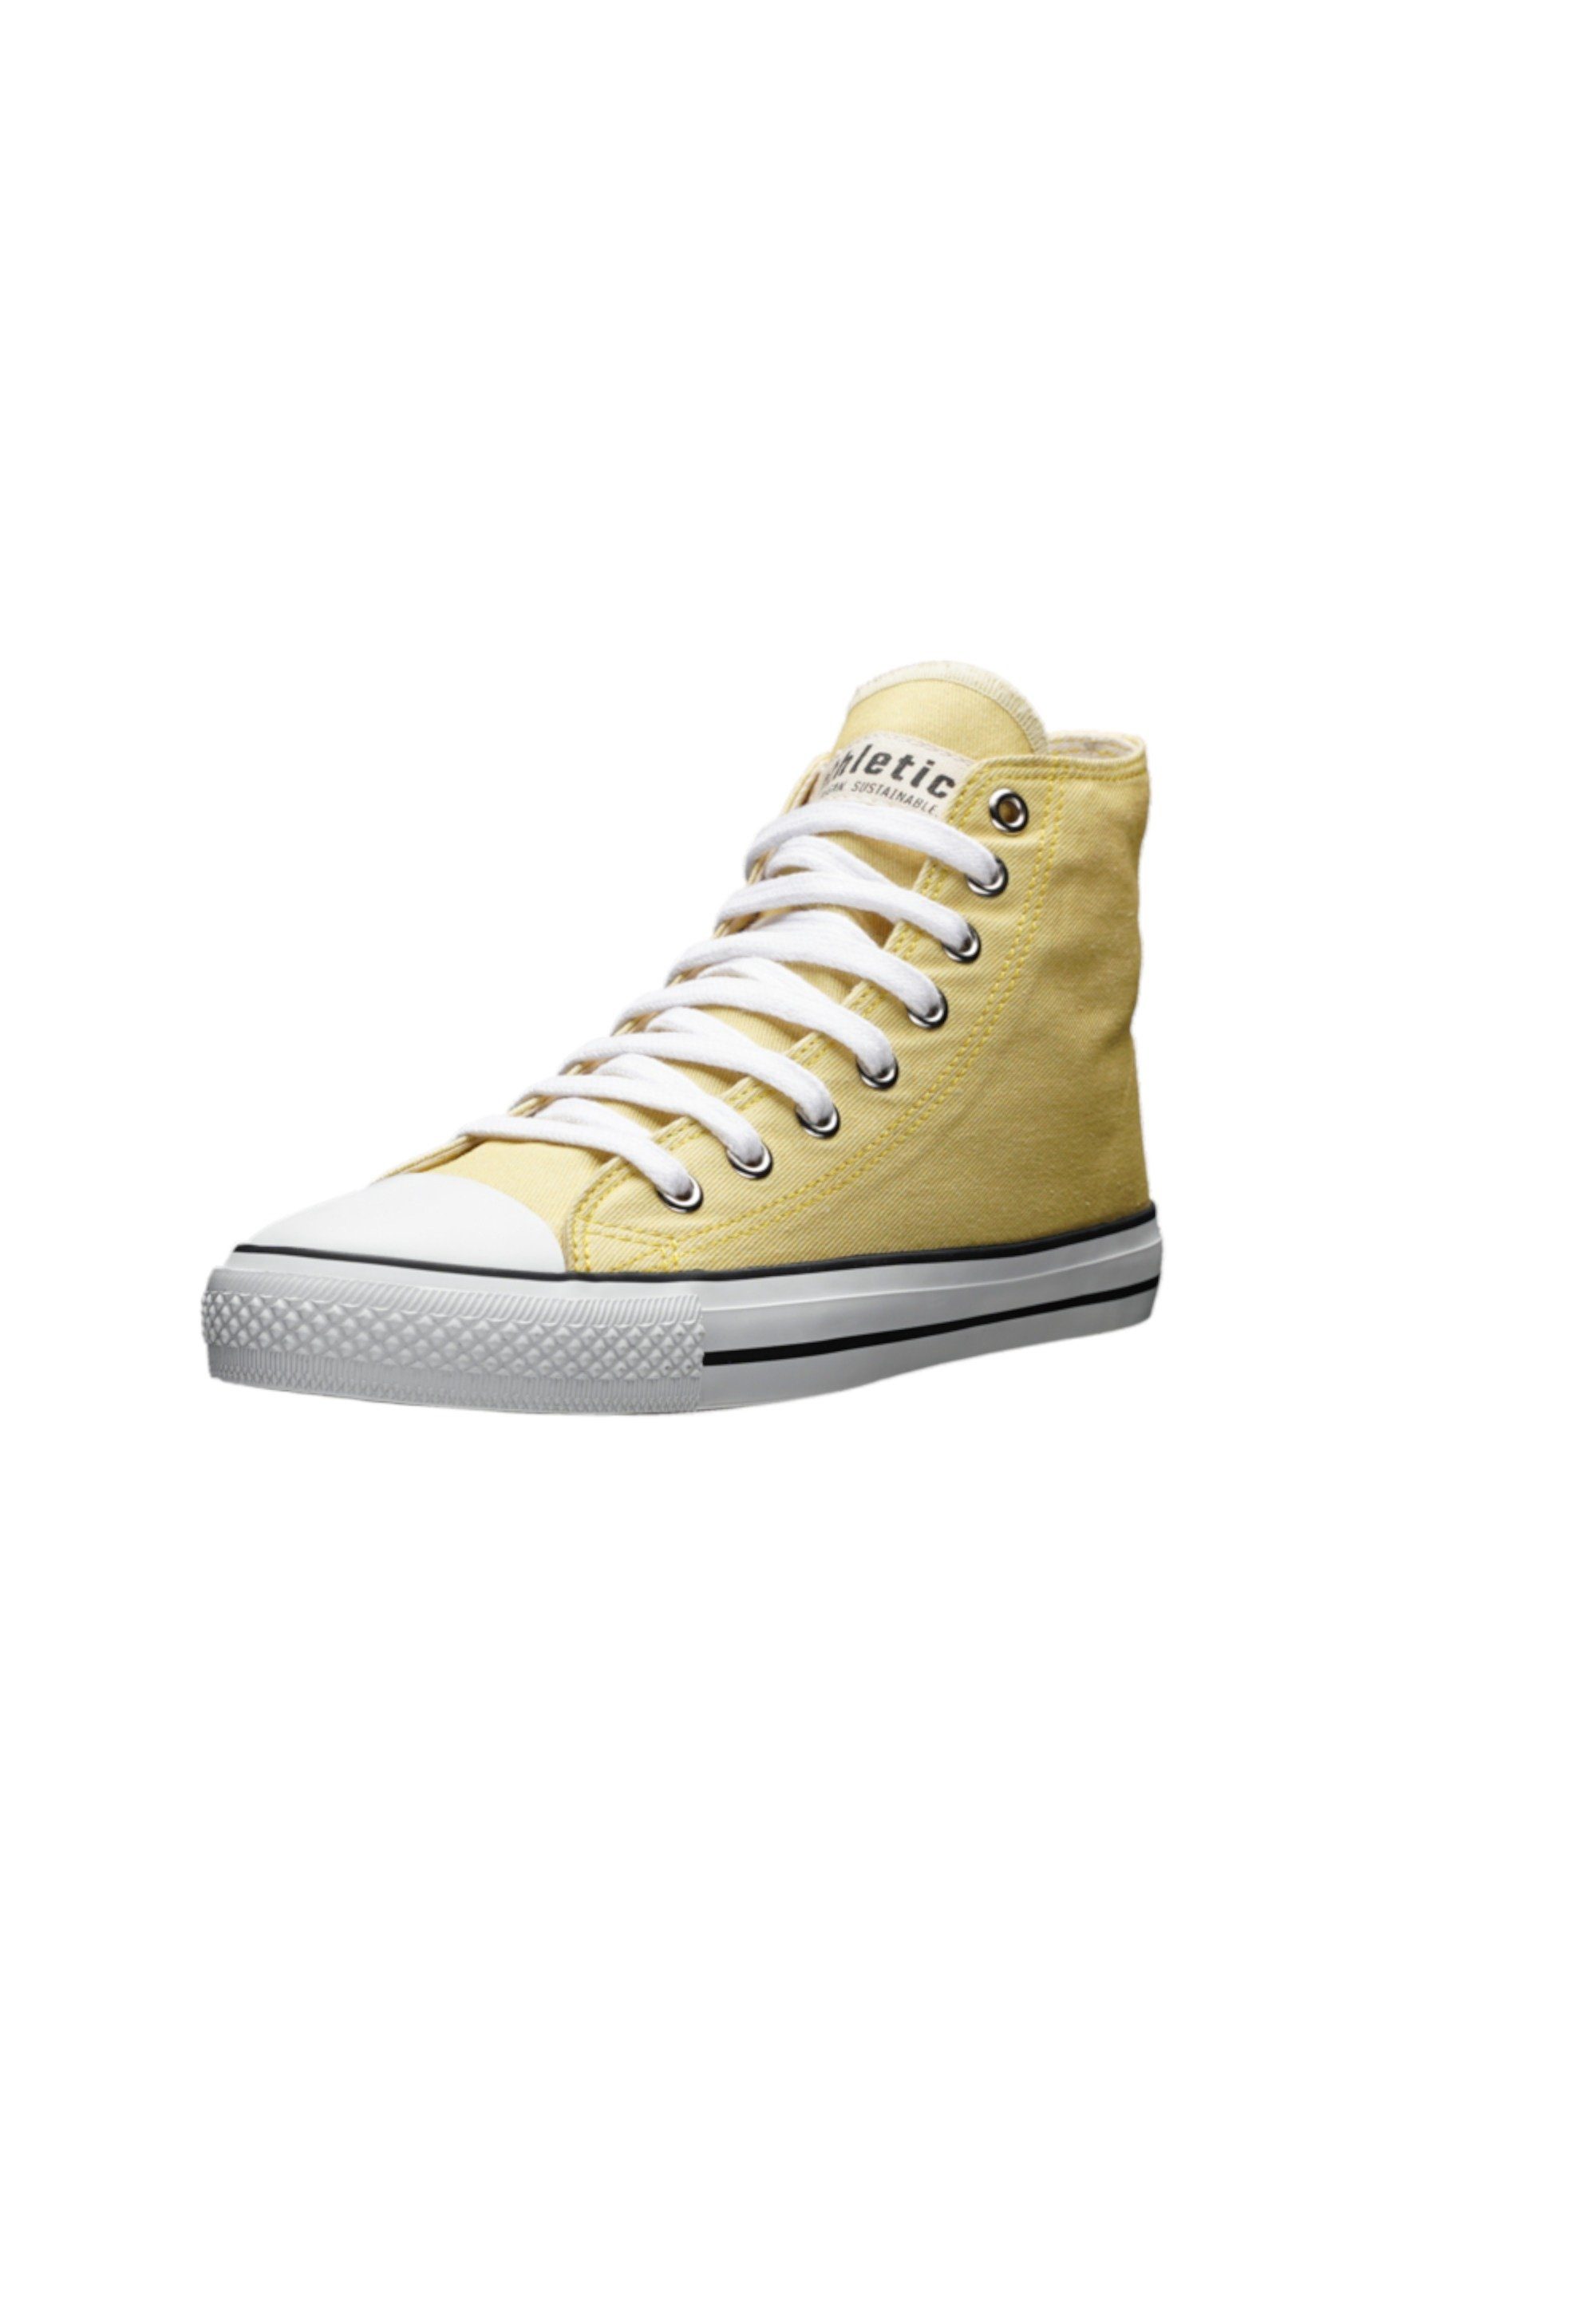 ETHLETIC White Cap Hi Cut Sneaker Fairtrade Produkt Watersign Yellow - Just White